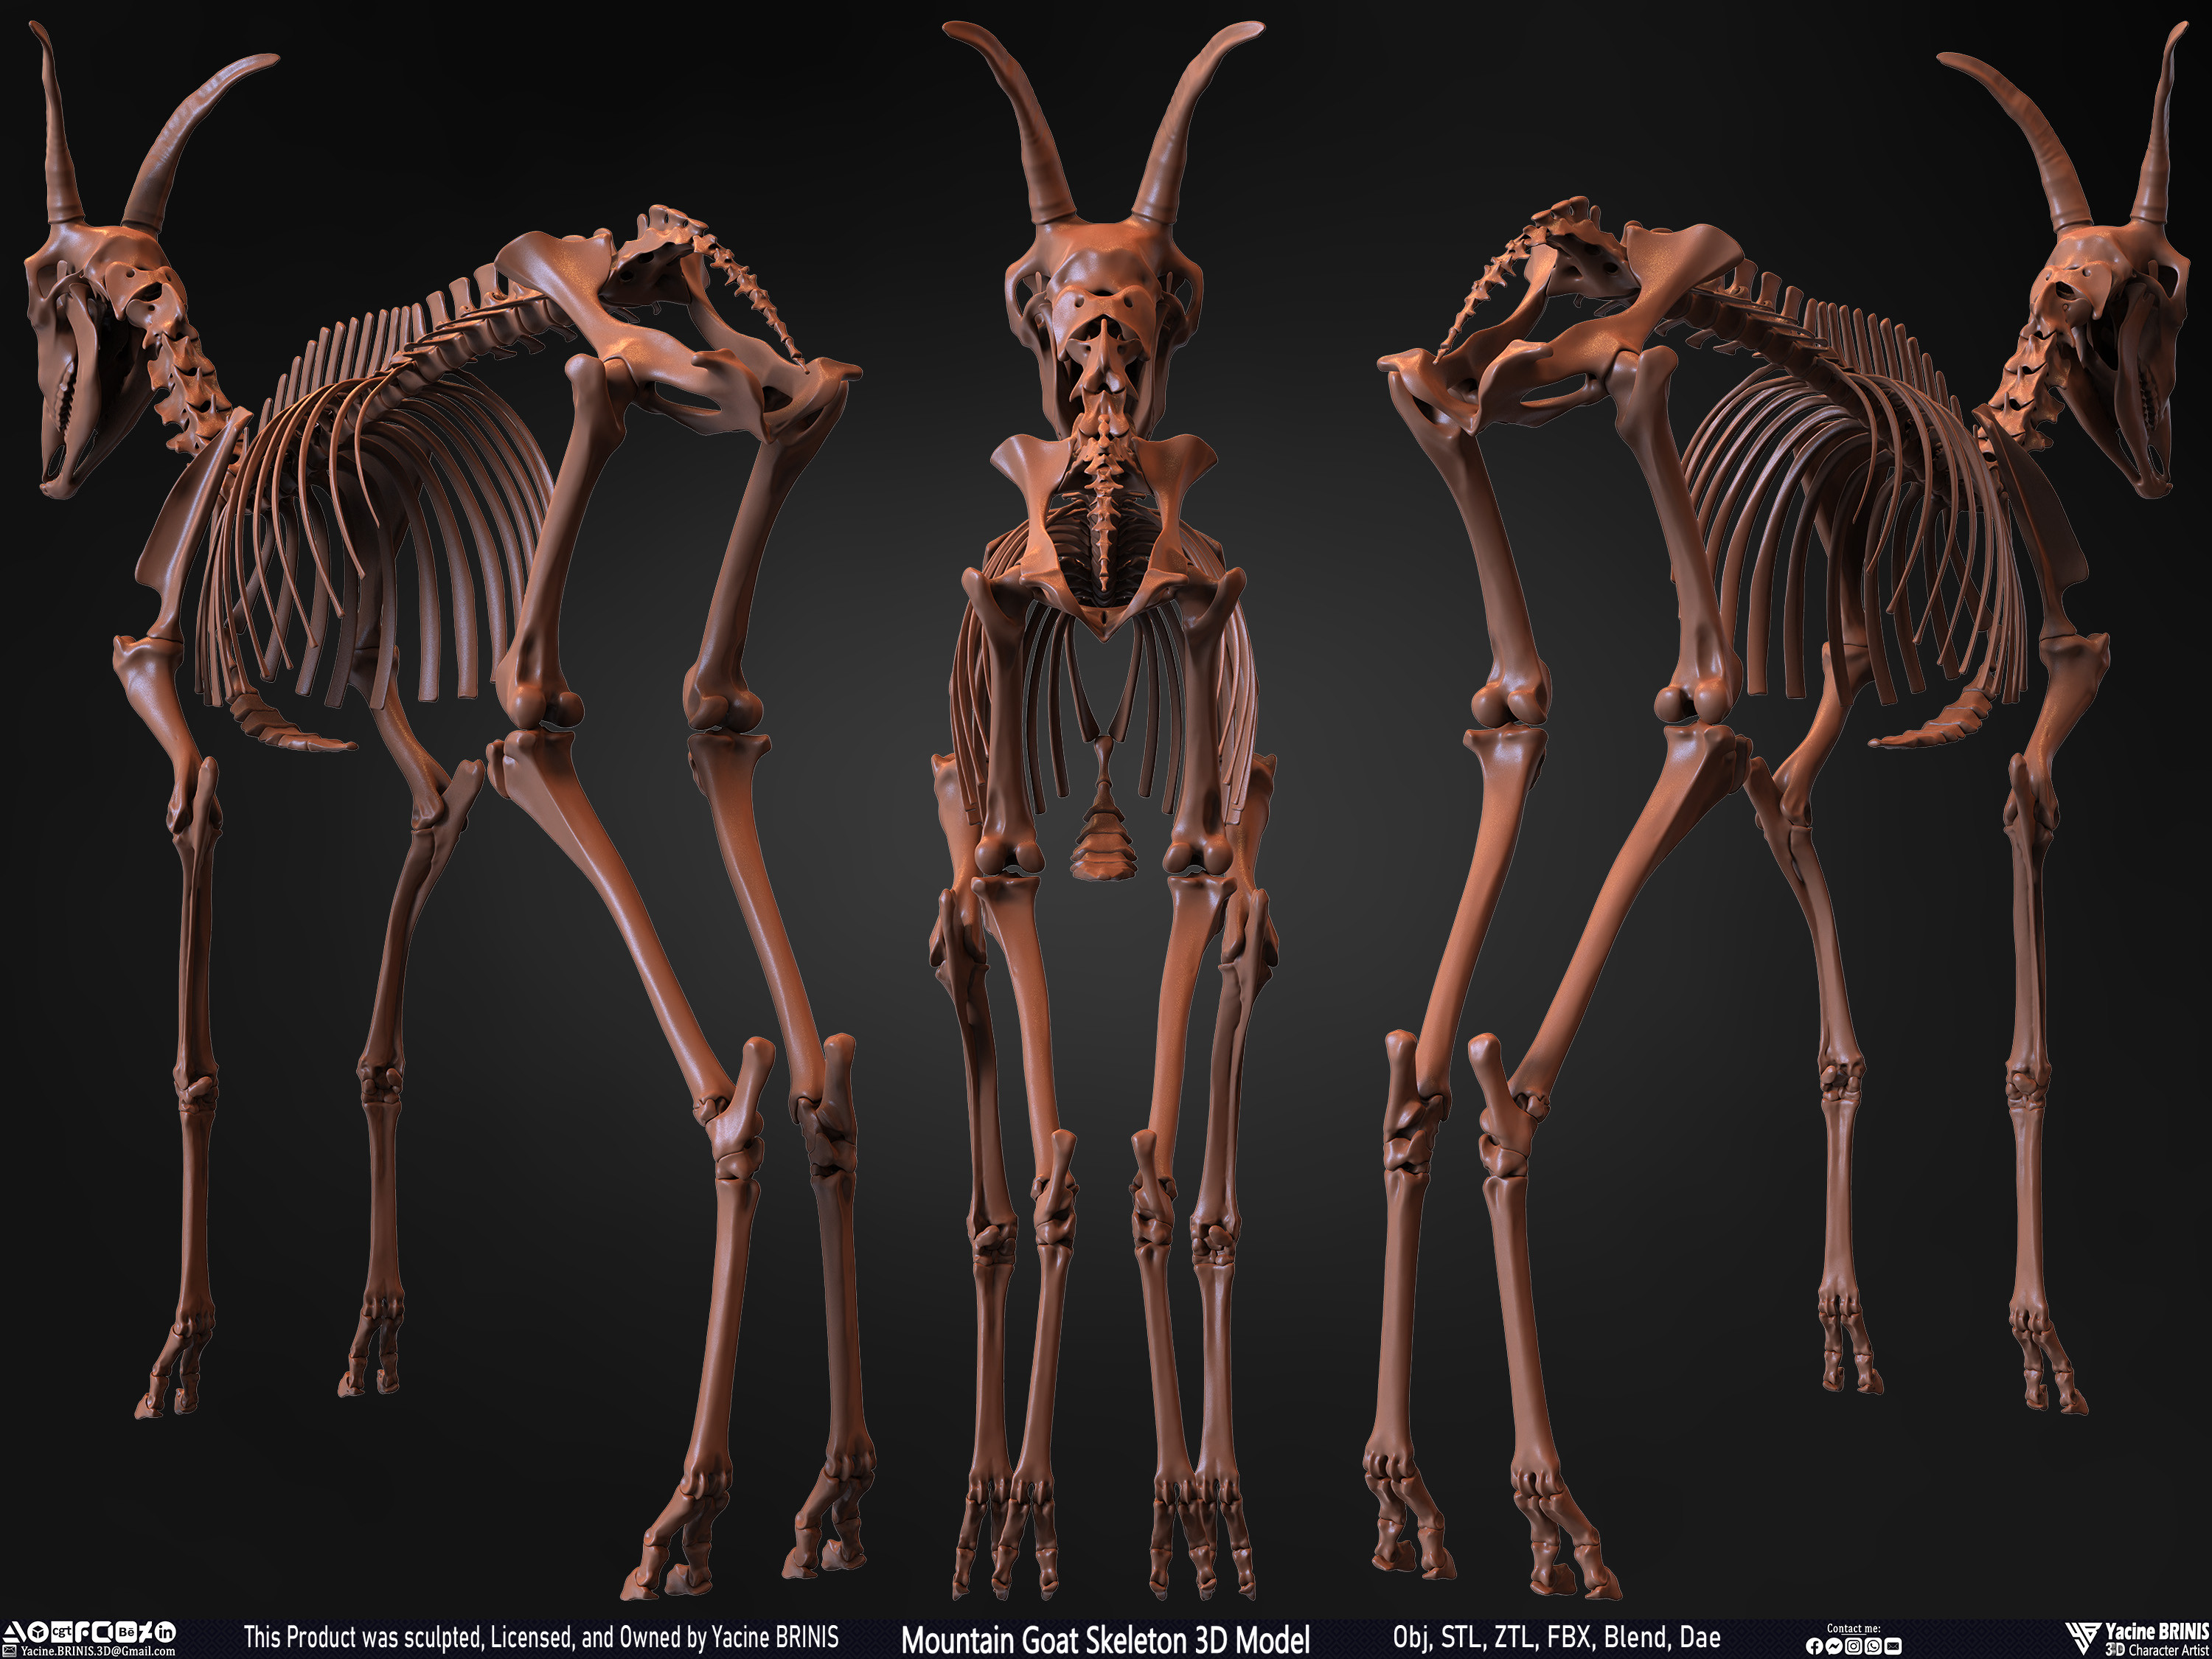 Mountain Goat Skeleton 3D Model Sculpted by Yacine BRINIS Set 034